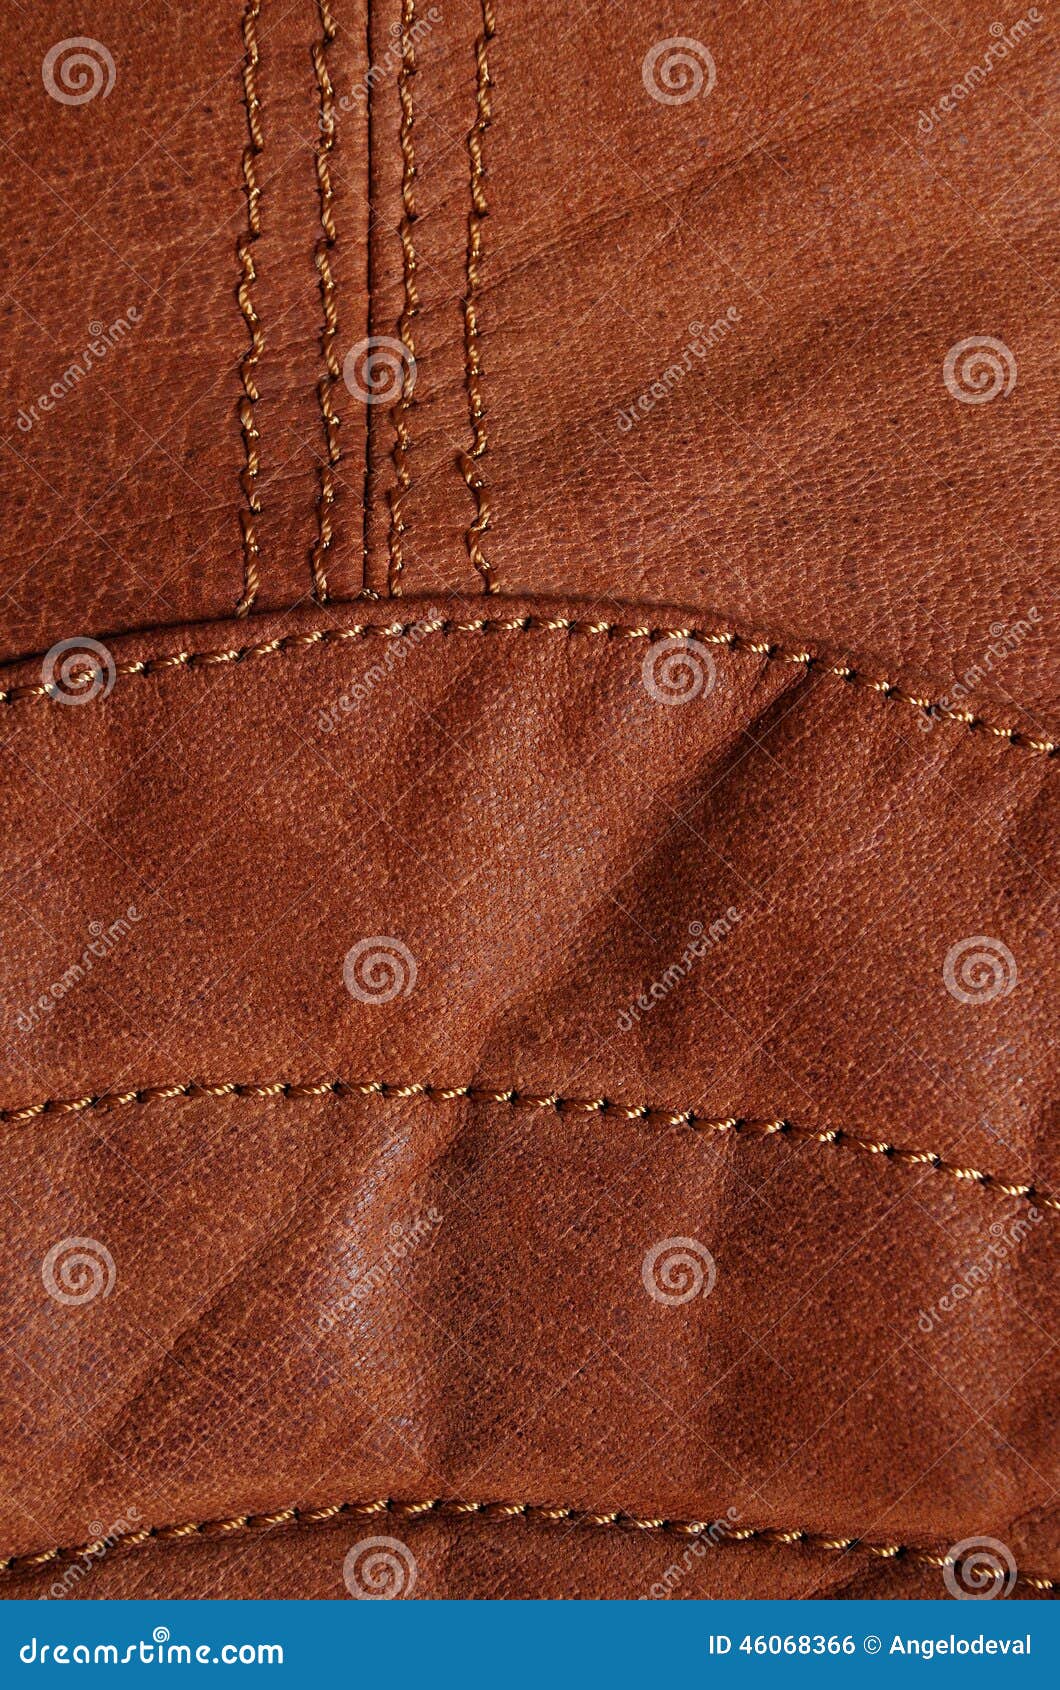 Seam in Brown Leather Jacket II Stock Photo - Image of texture, biker ...